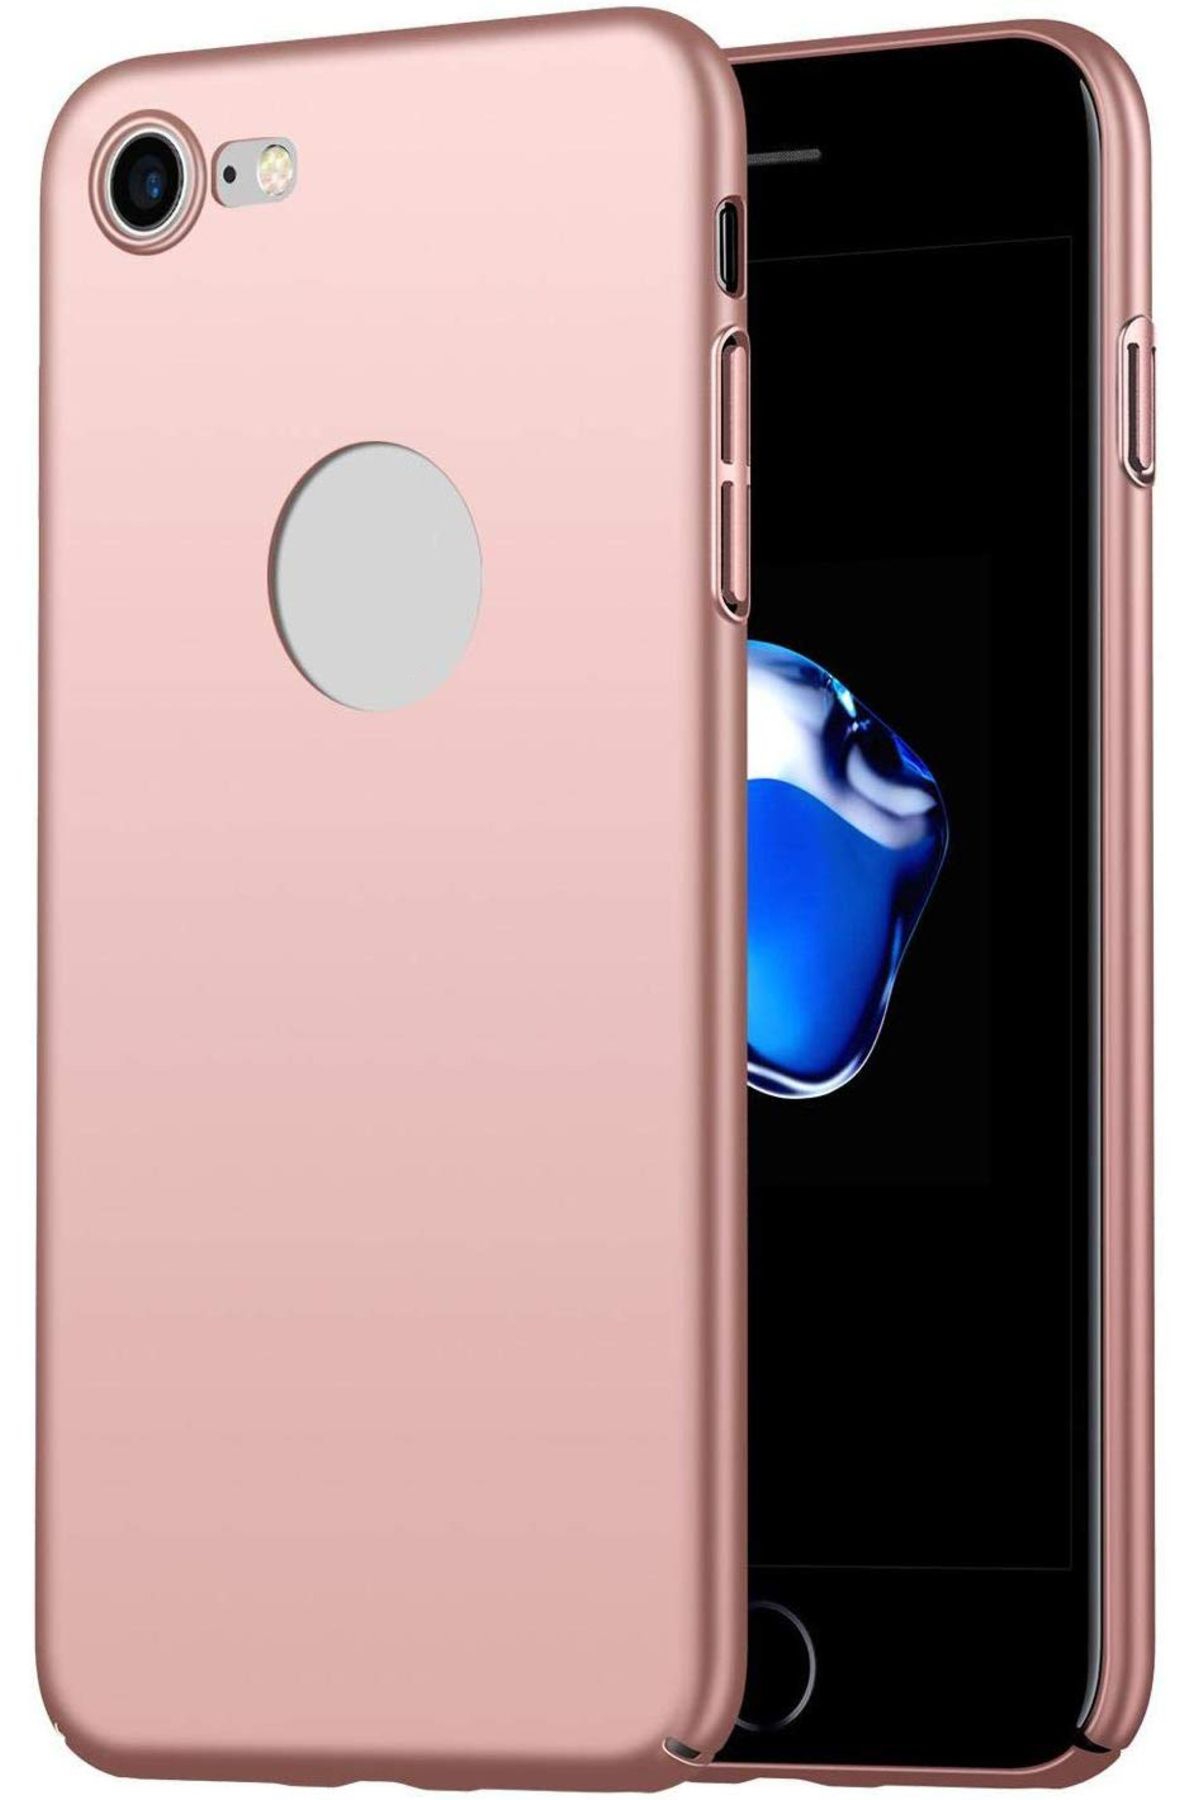 Moraksesuar Iphone 6s Plus Uyumlu Kılıf Ultra Ince Renkli Silikon Kapak Rose Gold.